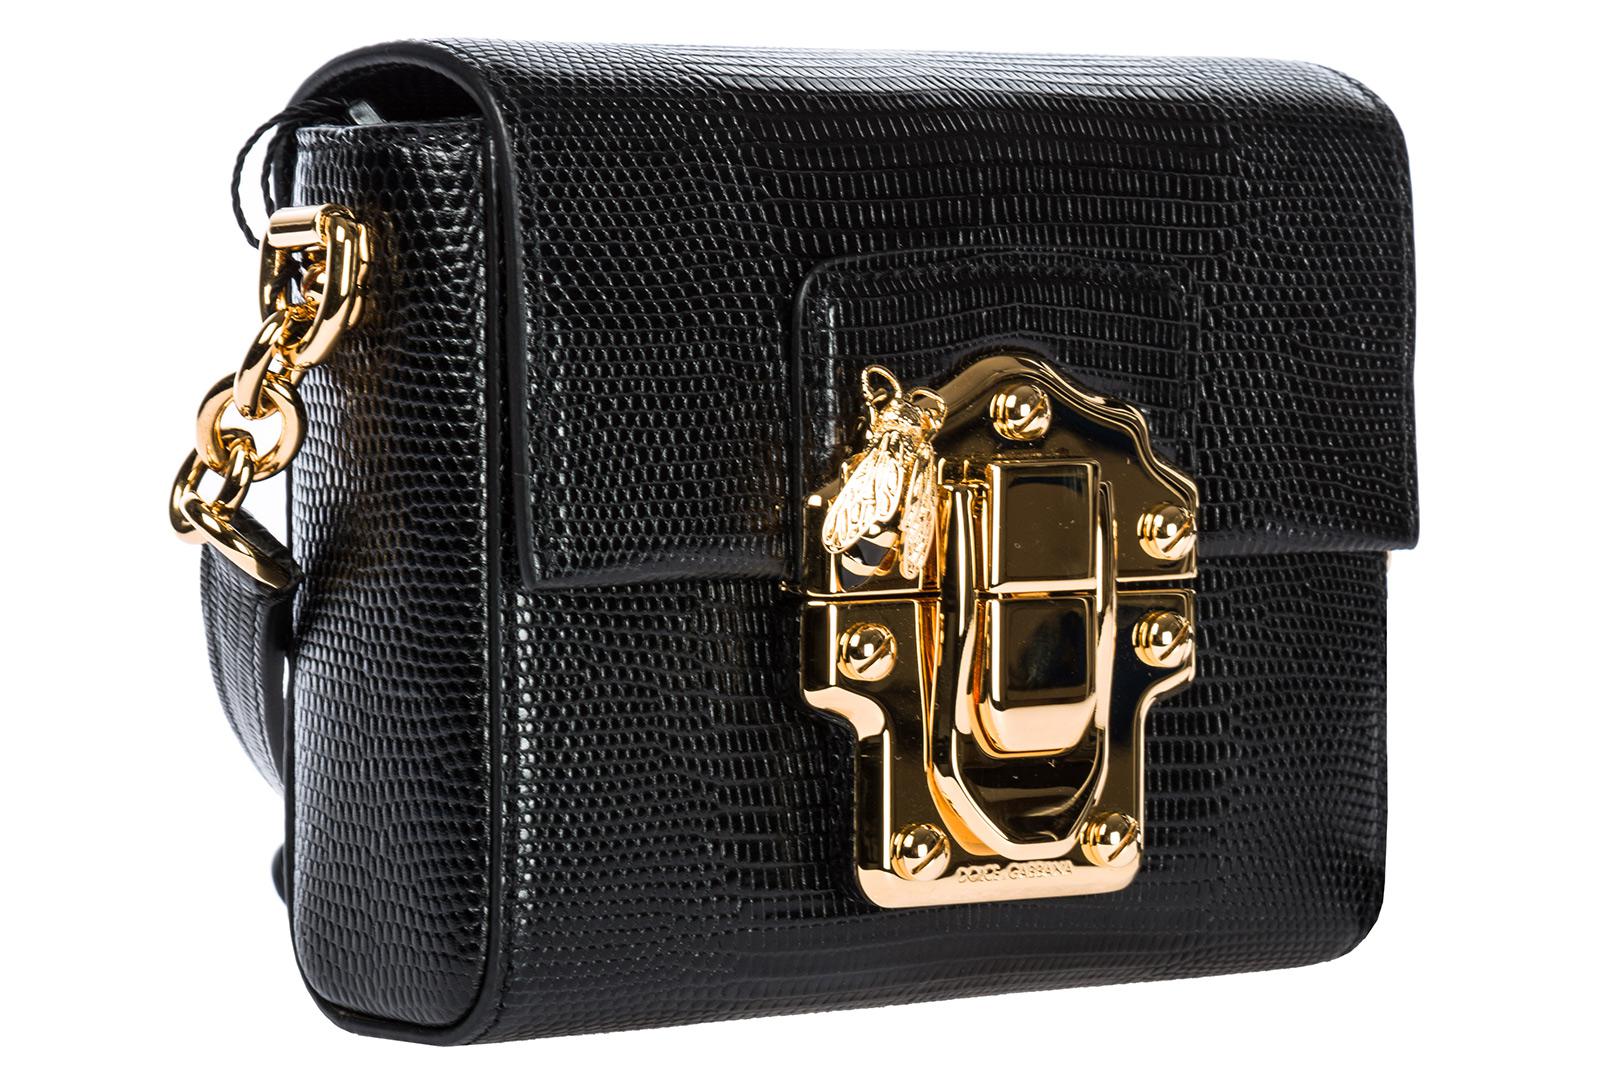 Dolce & Gabbana Leather Cross-body Messenger Shoulder Bag Lucia in Nero (Black) - Lyst